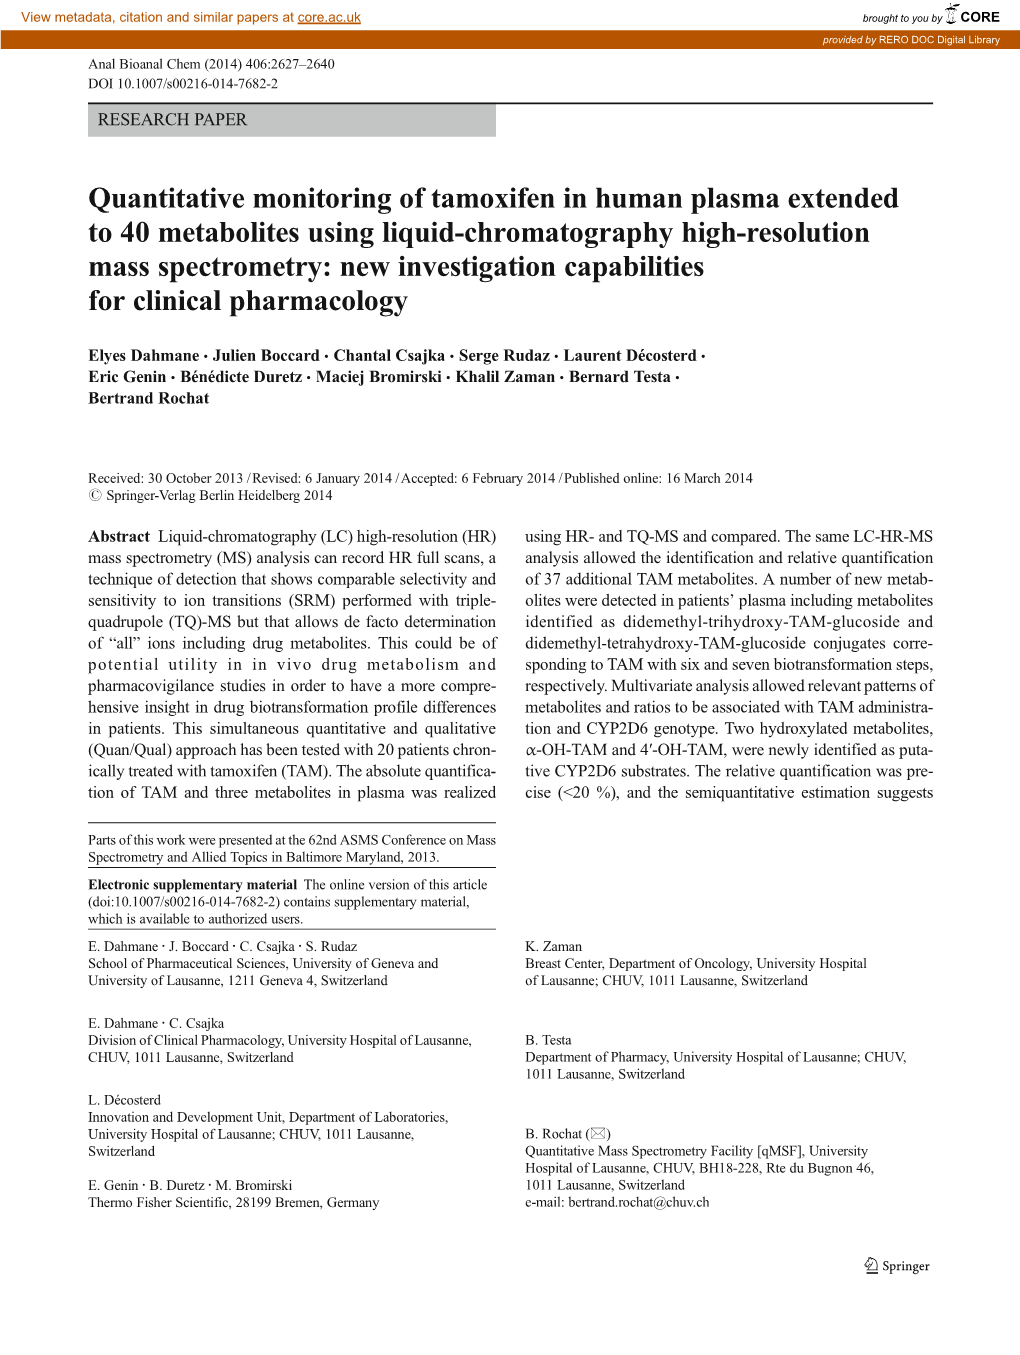 Quantitative Monitoring of Tamoxifen in Human Plasma Extended to 40